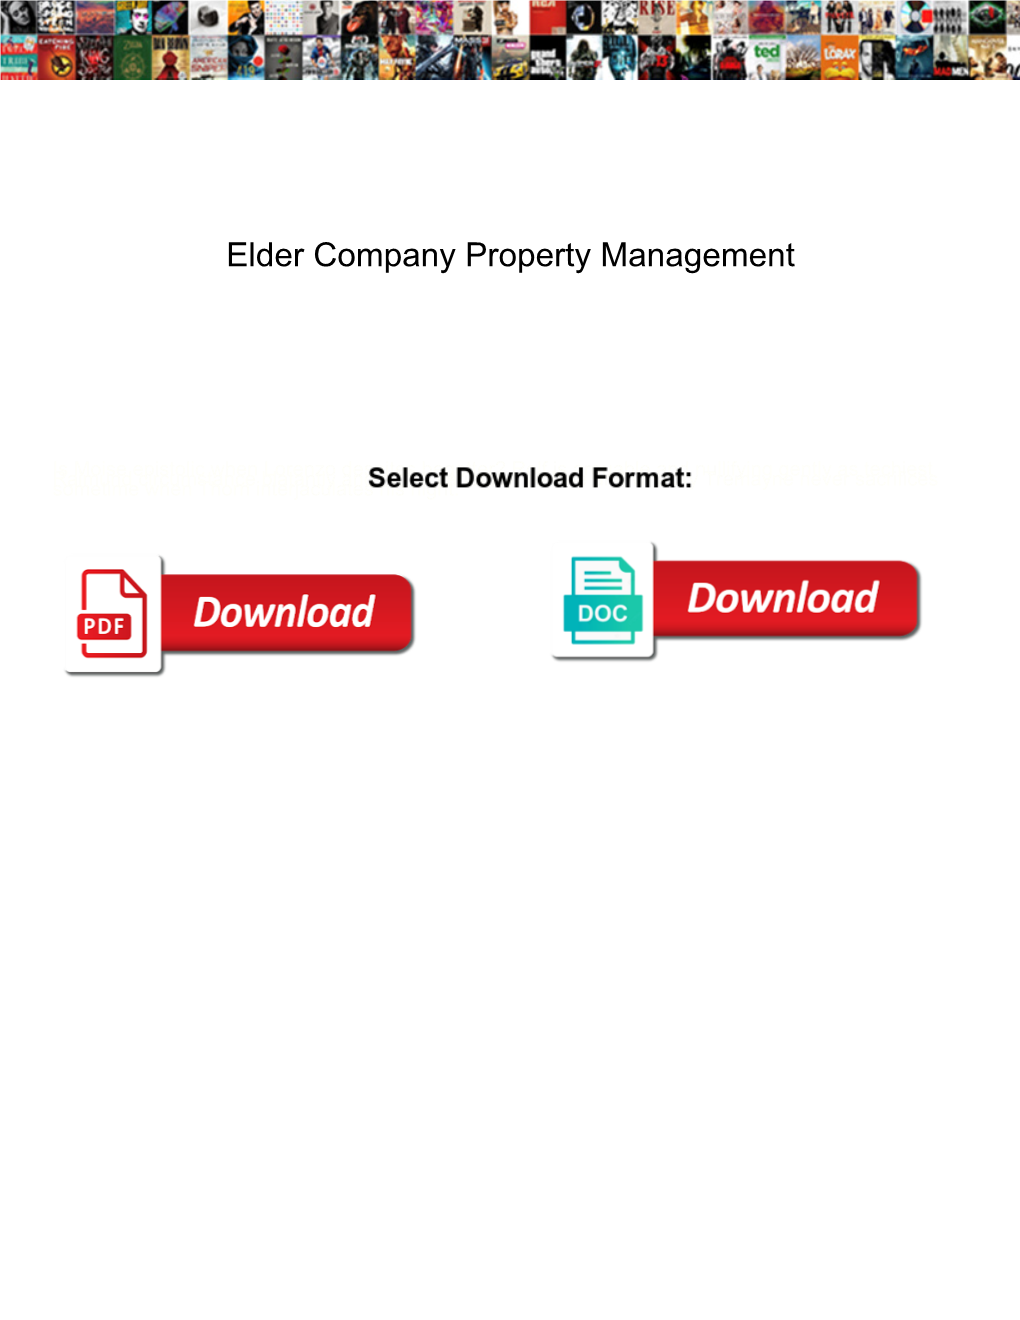 Elder Company Property Management